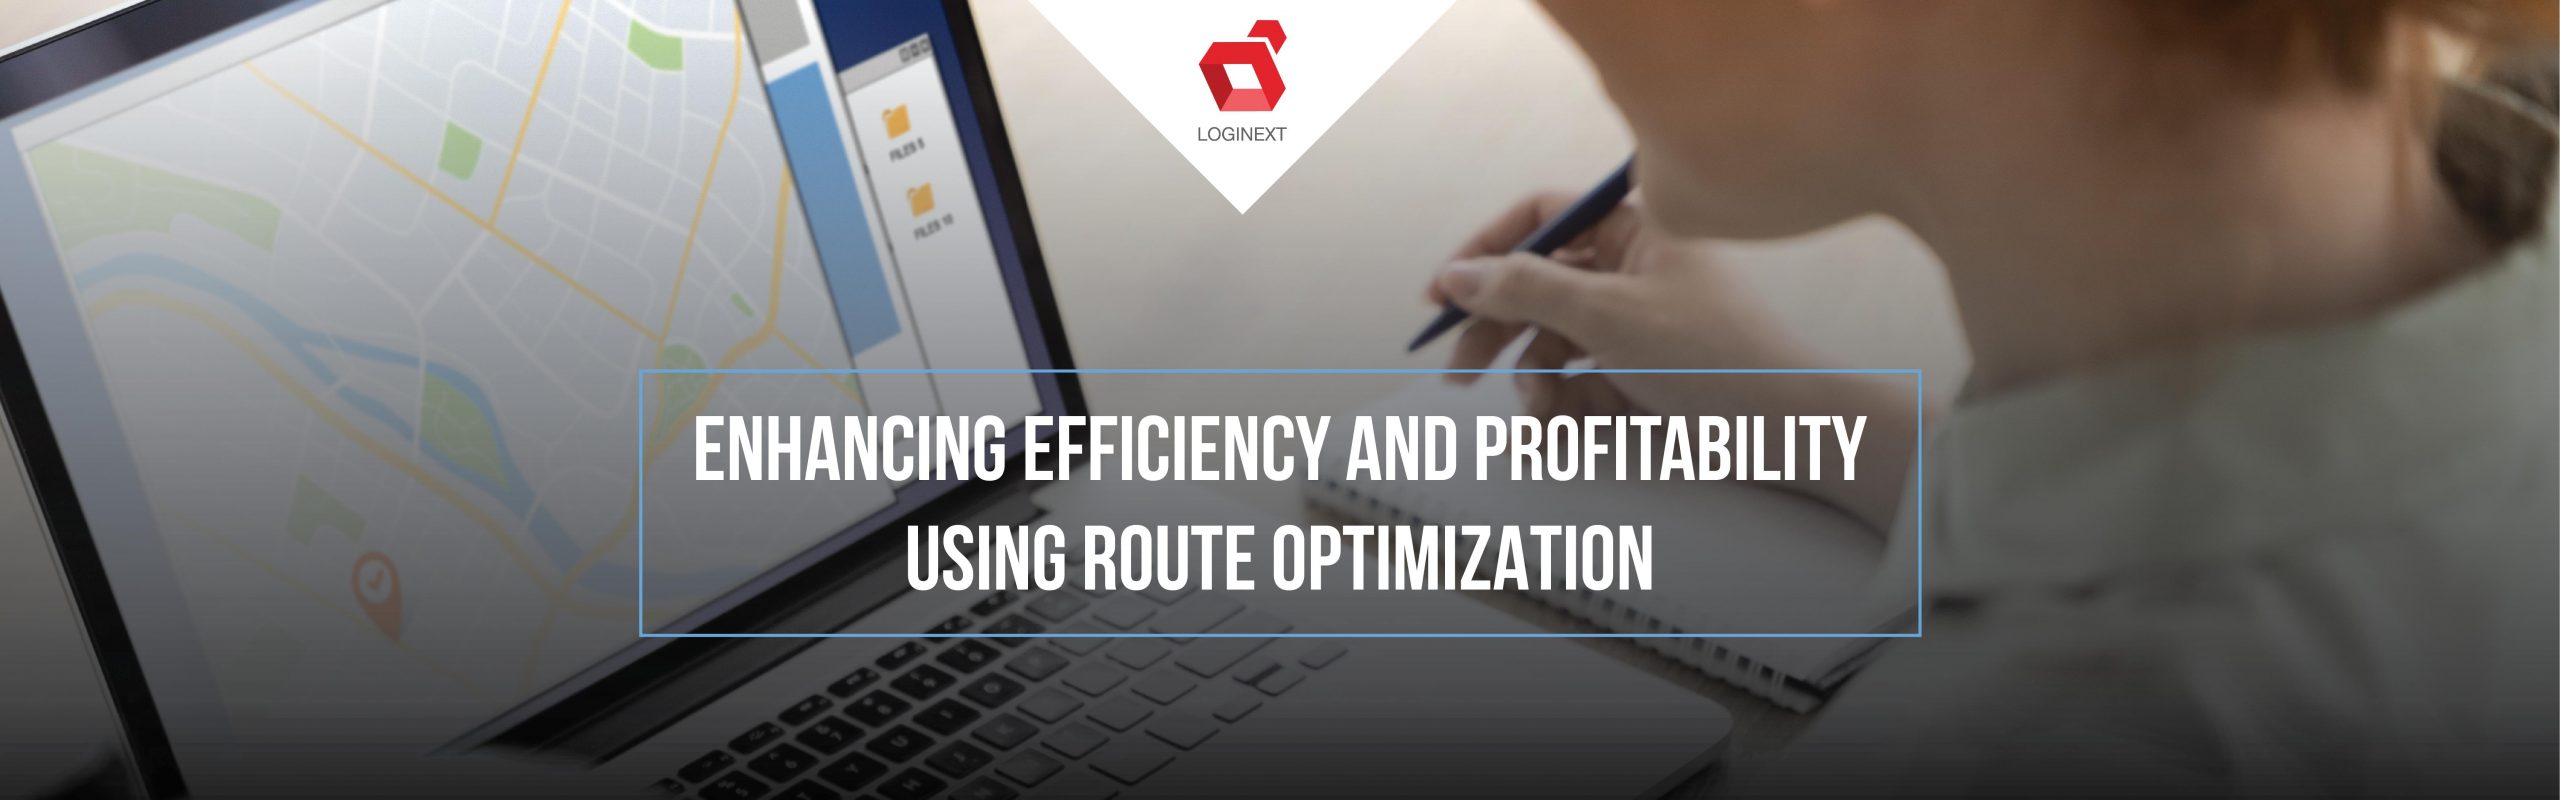 Logistics Route Optimization Using Machine Learning_ Enhancing Efficiency and Profitability